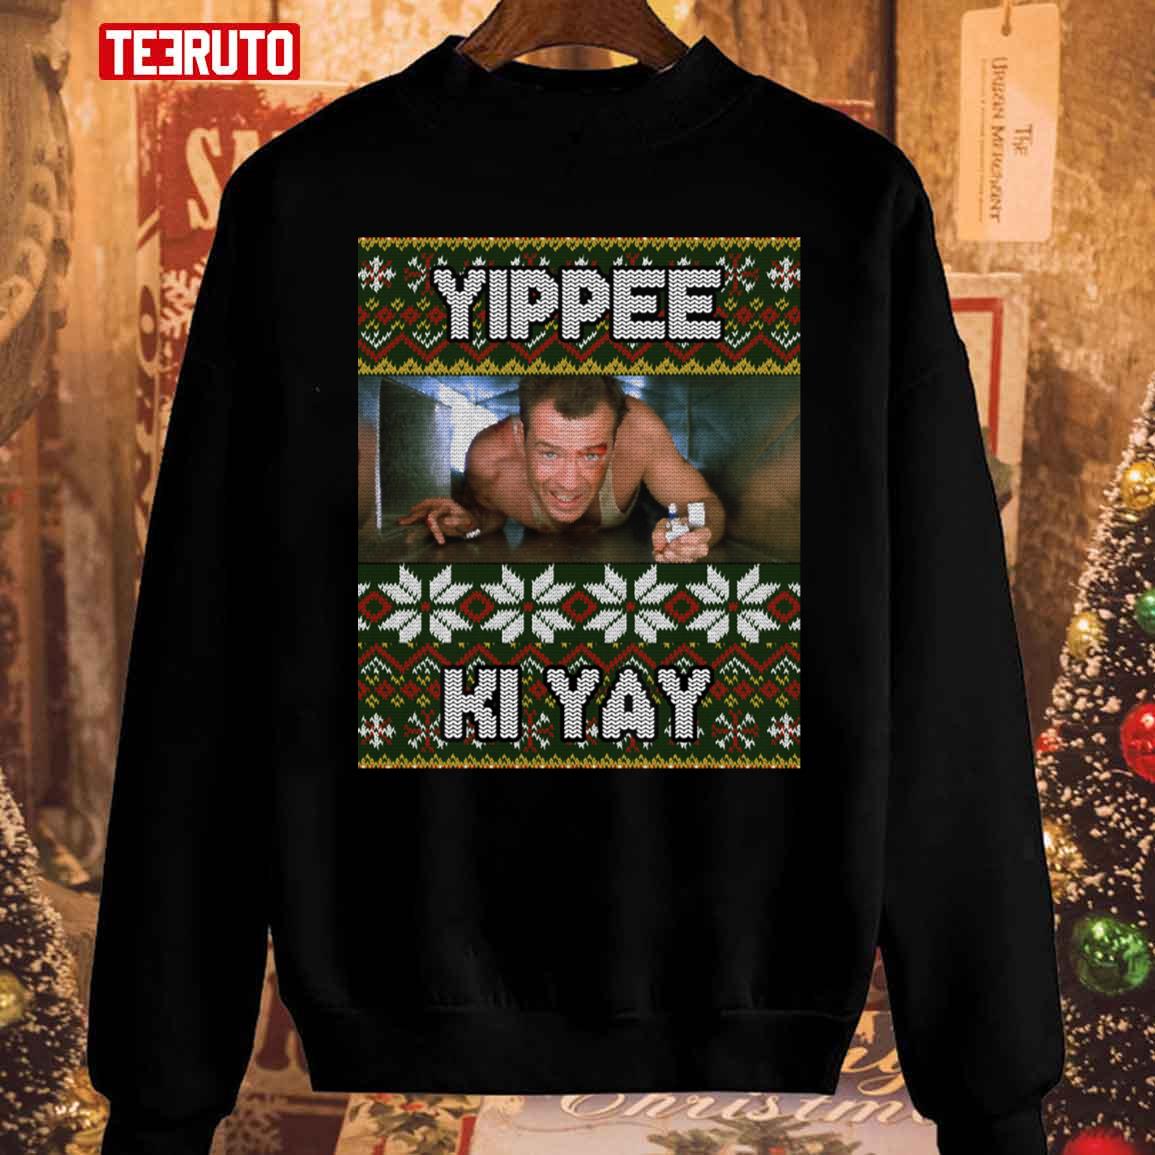 Yippee Ki Yay Ugly Christmas Die Hard Tribute Unisex Sweatshirt